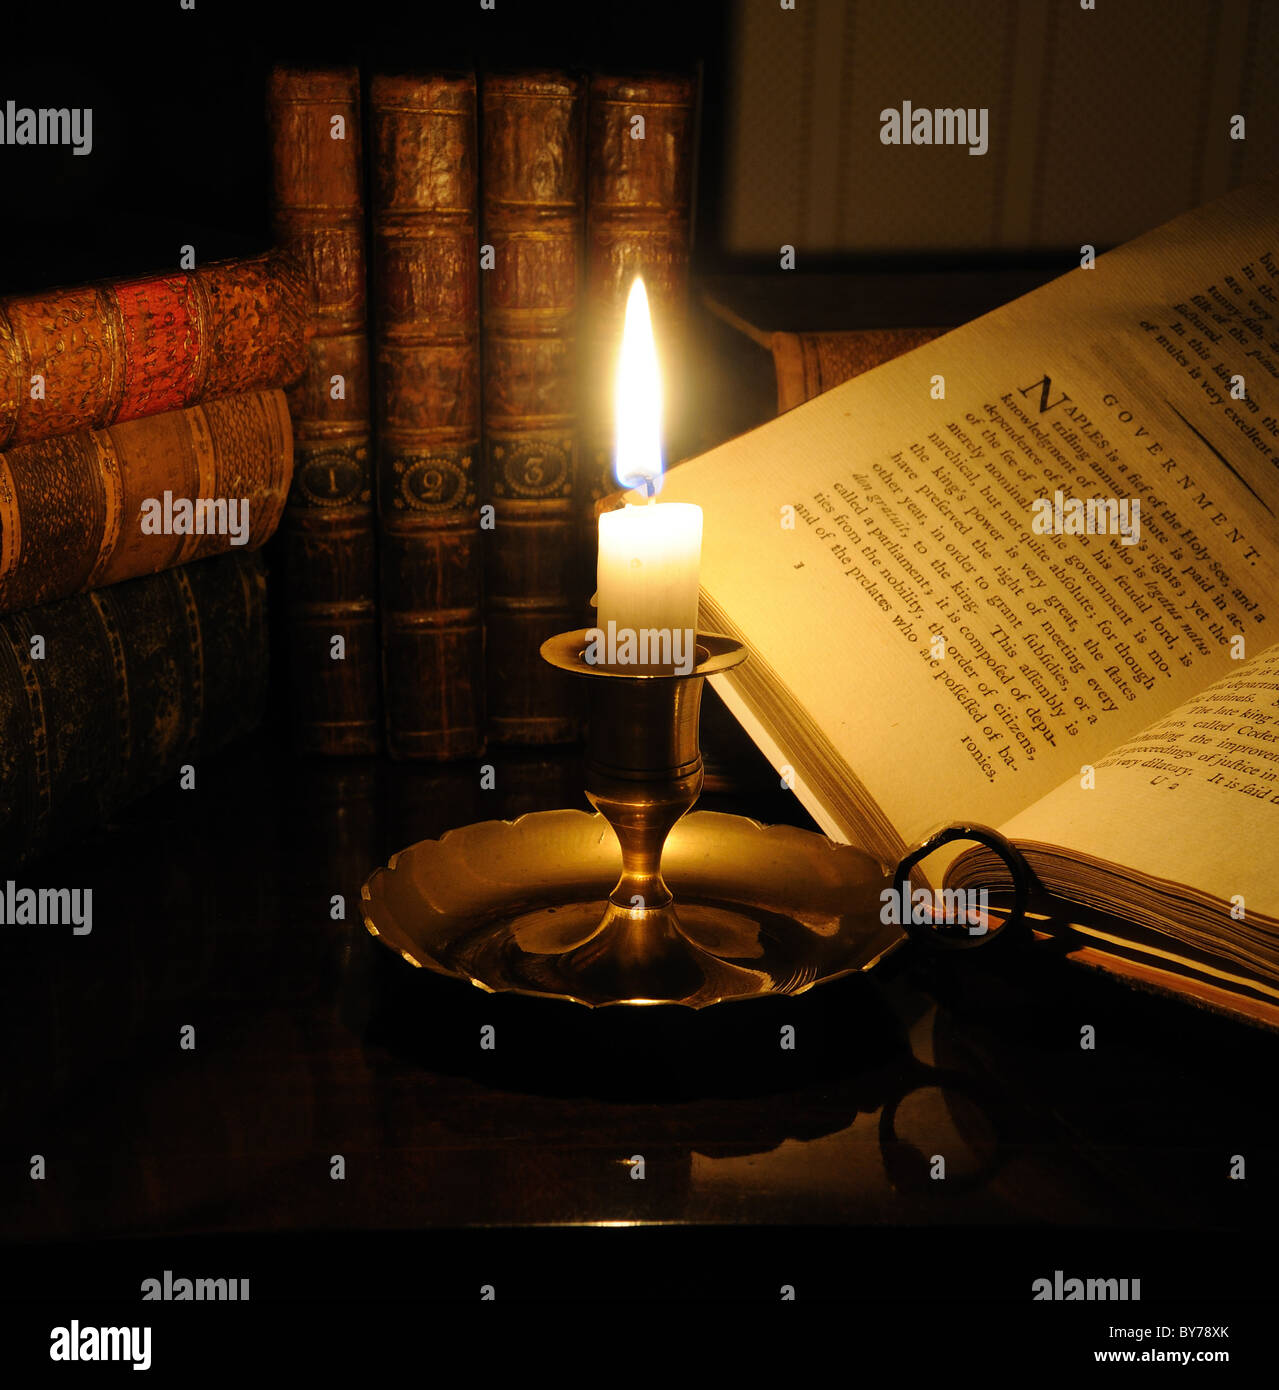 Anticuario de libros iluminados por velas Foto de stock